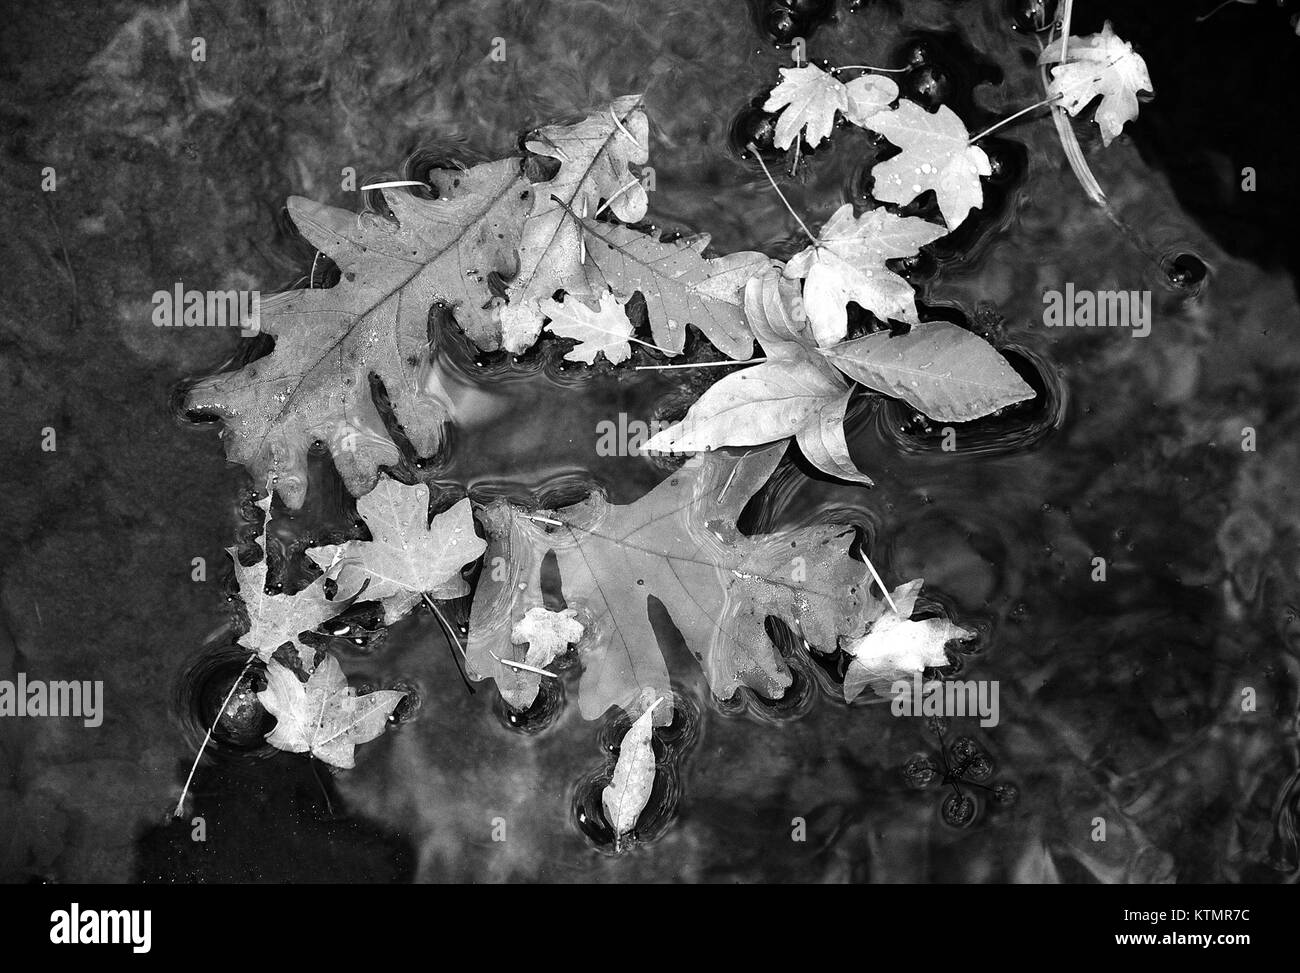 AZ HUACHUCA BERGE, Garten Canyon, AZ04 (11 1 11) Herbst Farbe (4) (10462718545) Stockfoto